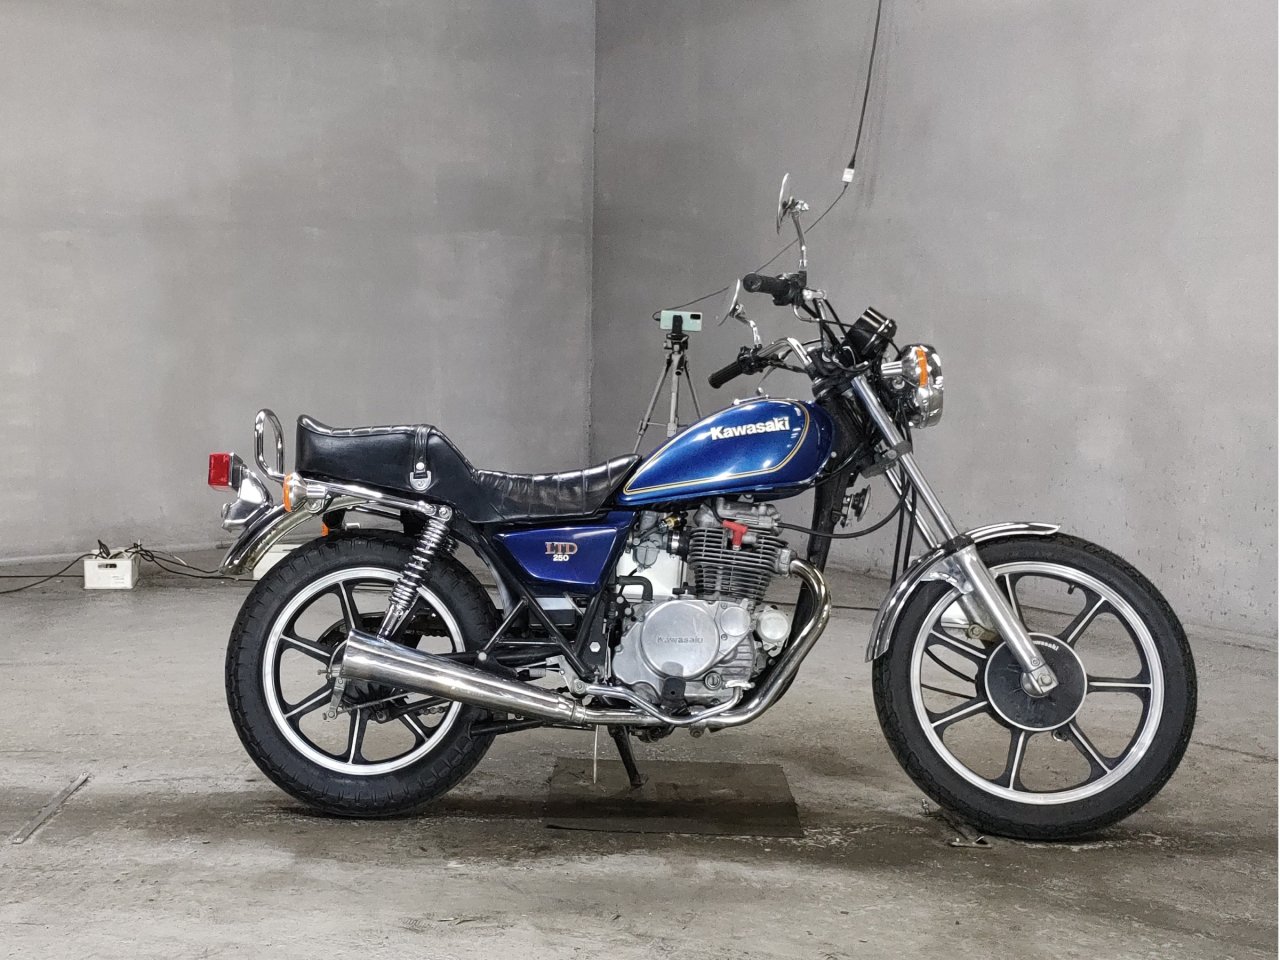 Kawasaki Z250 Ltd. - Adamoto - Motorcycles from Japan